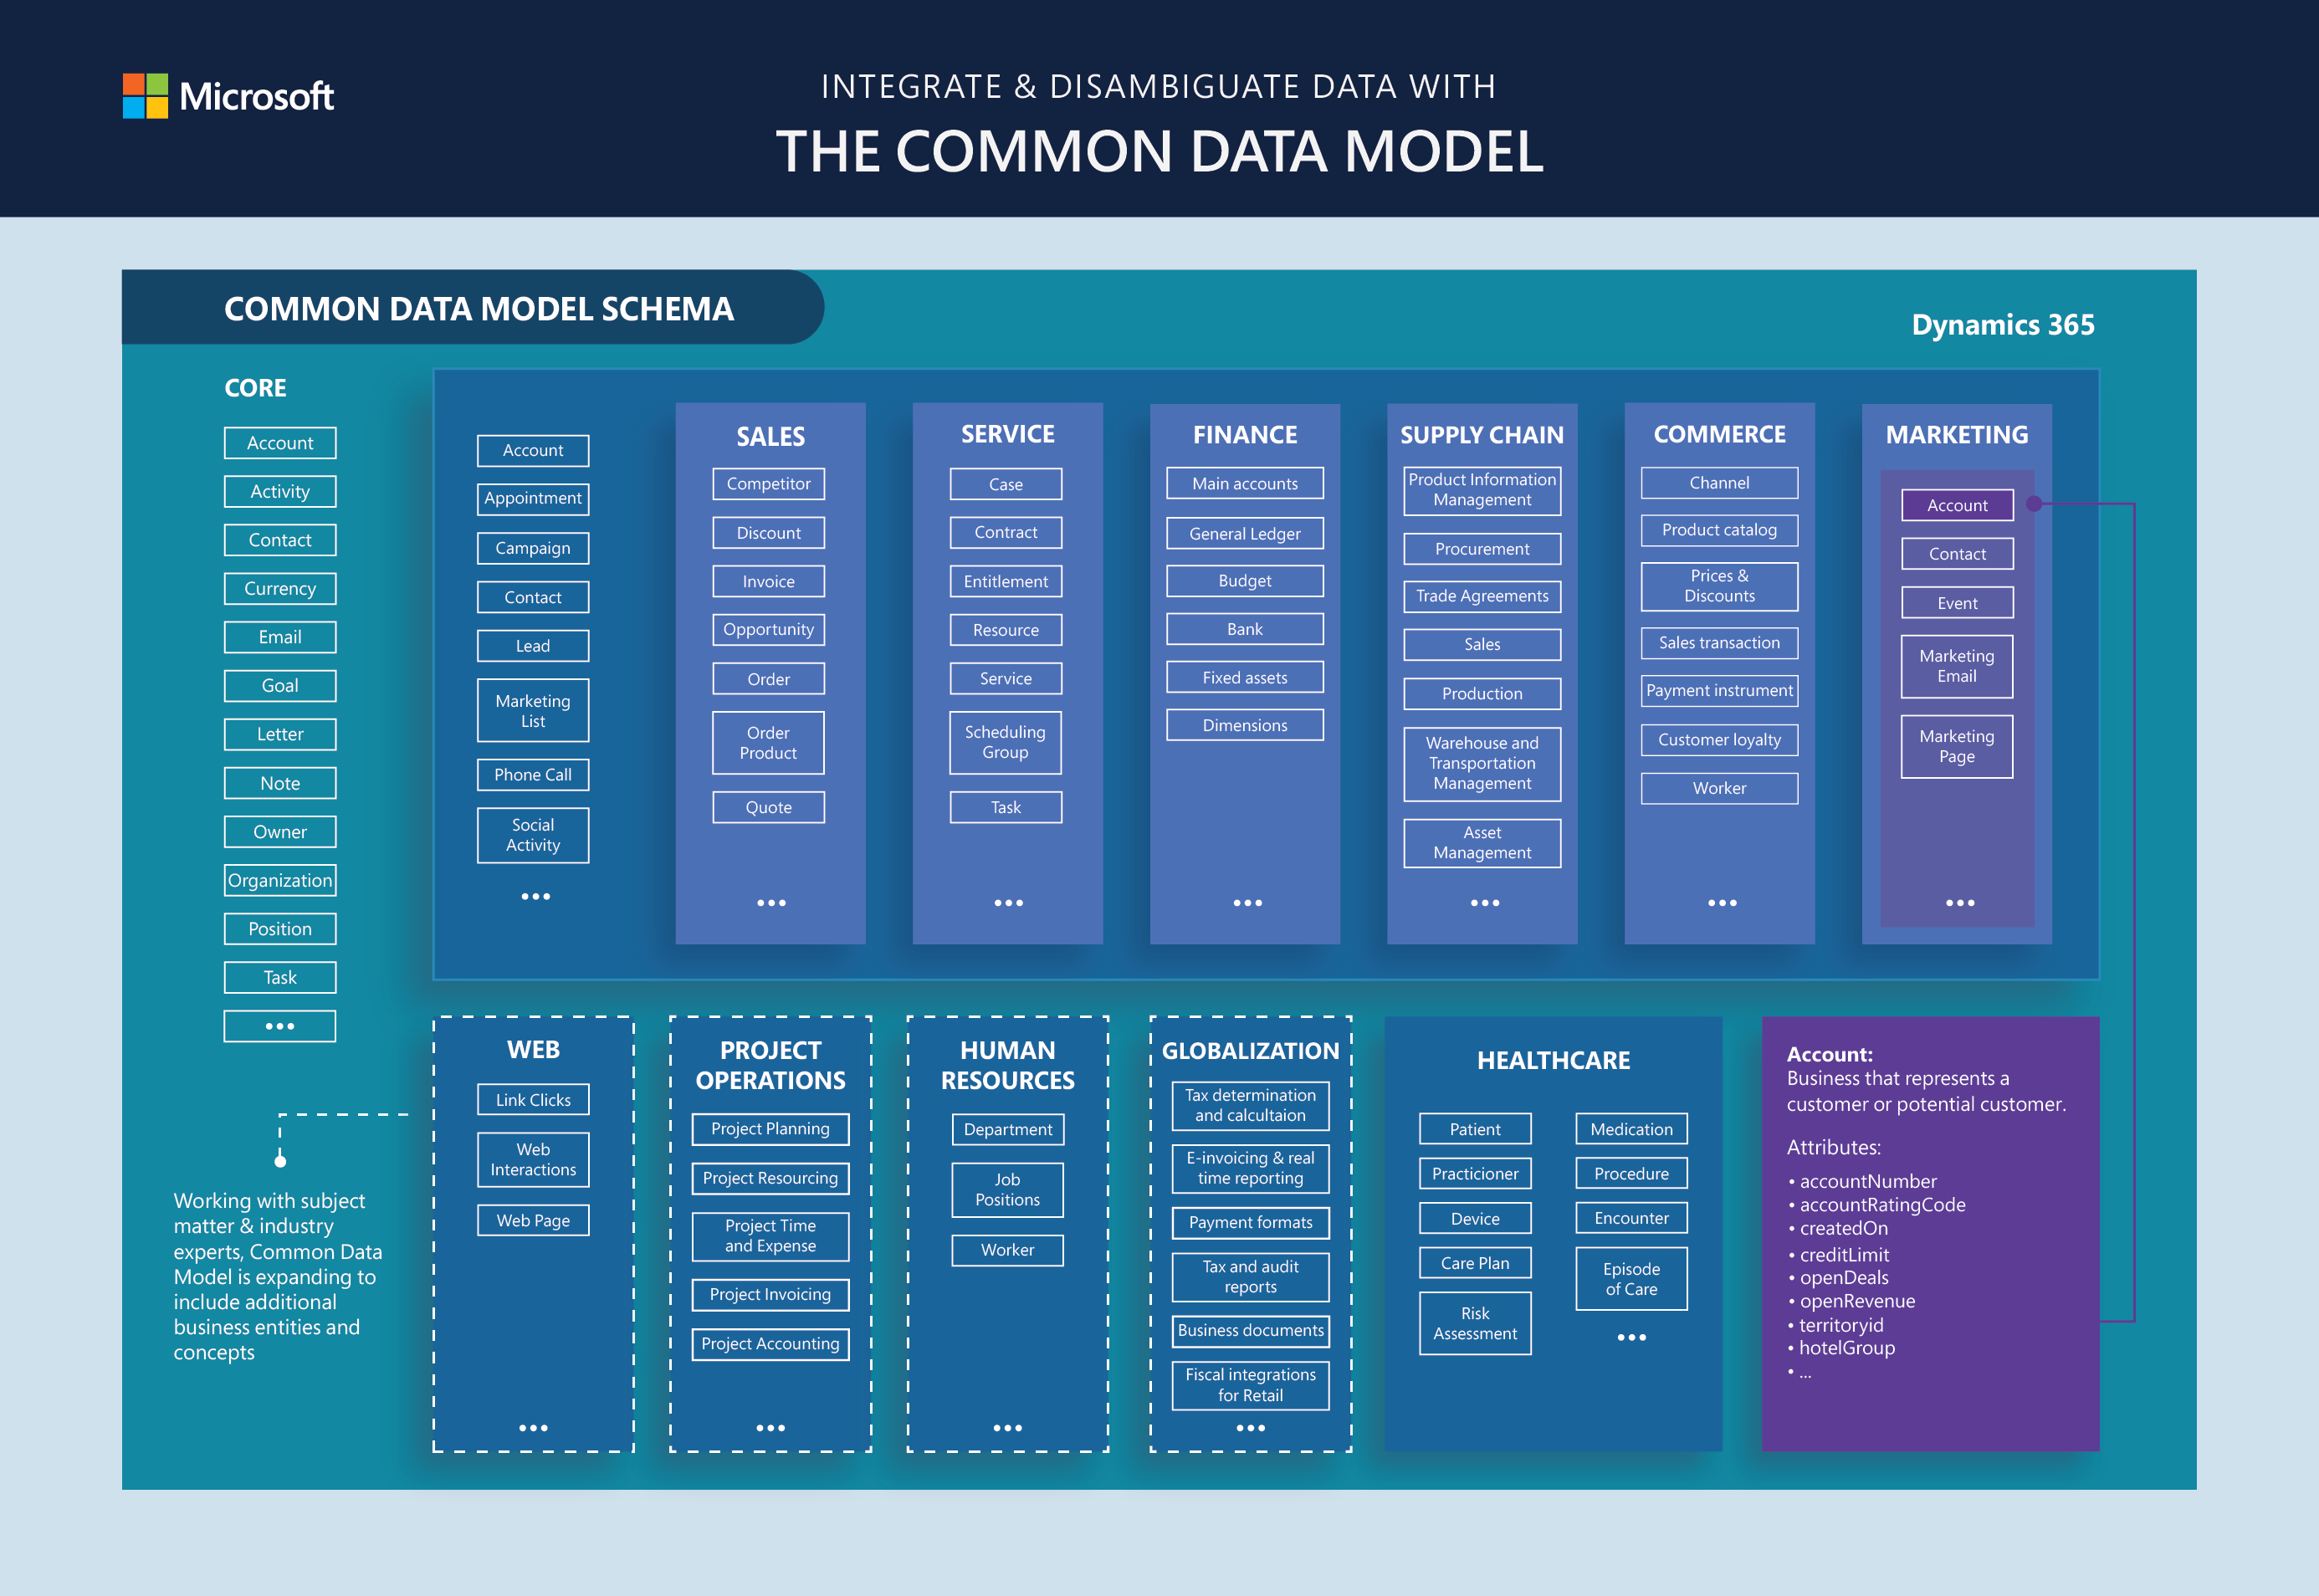 Image showing Microsoft’s Common Data Model